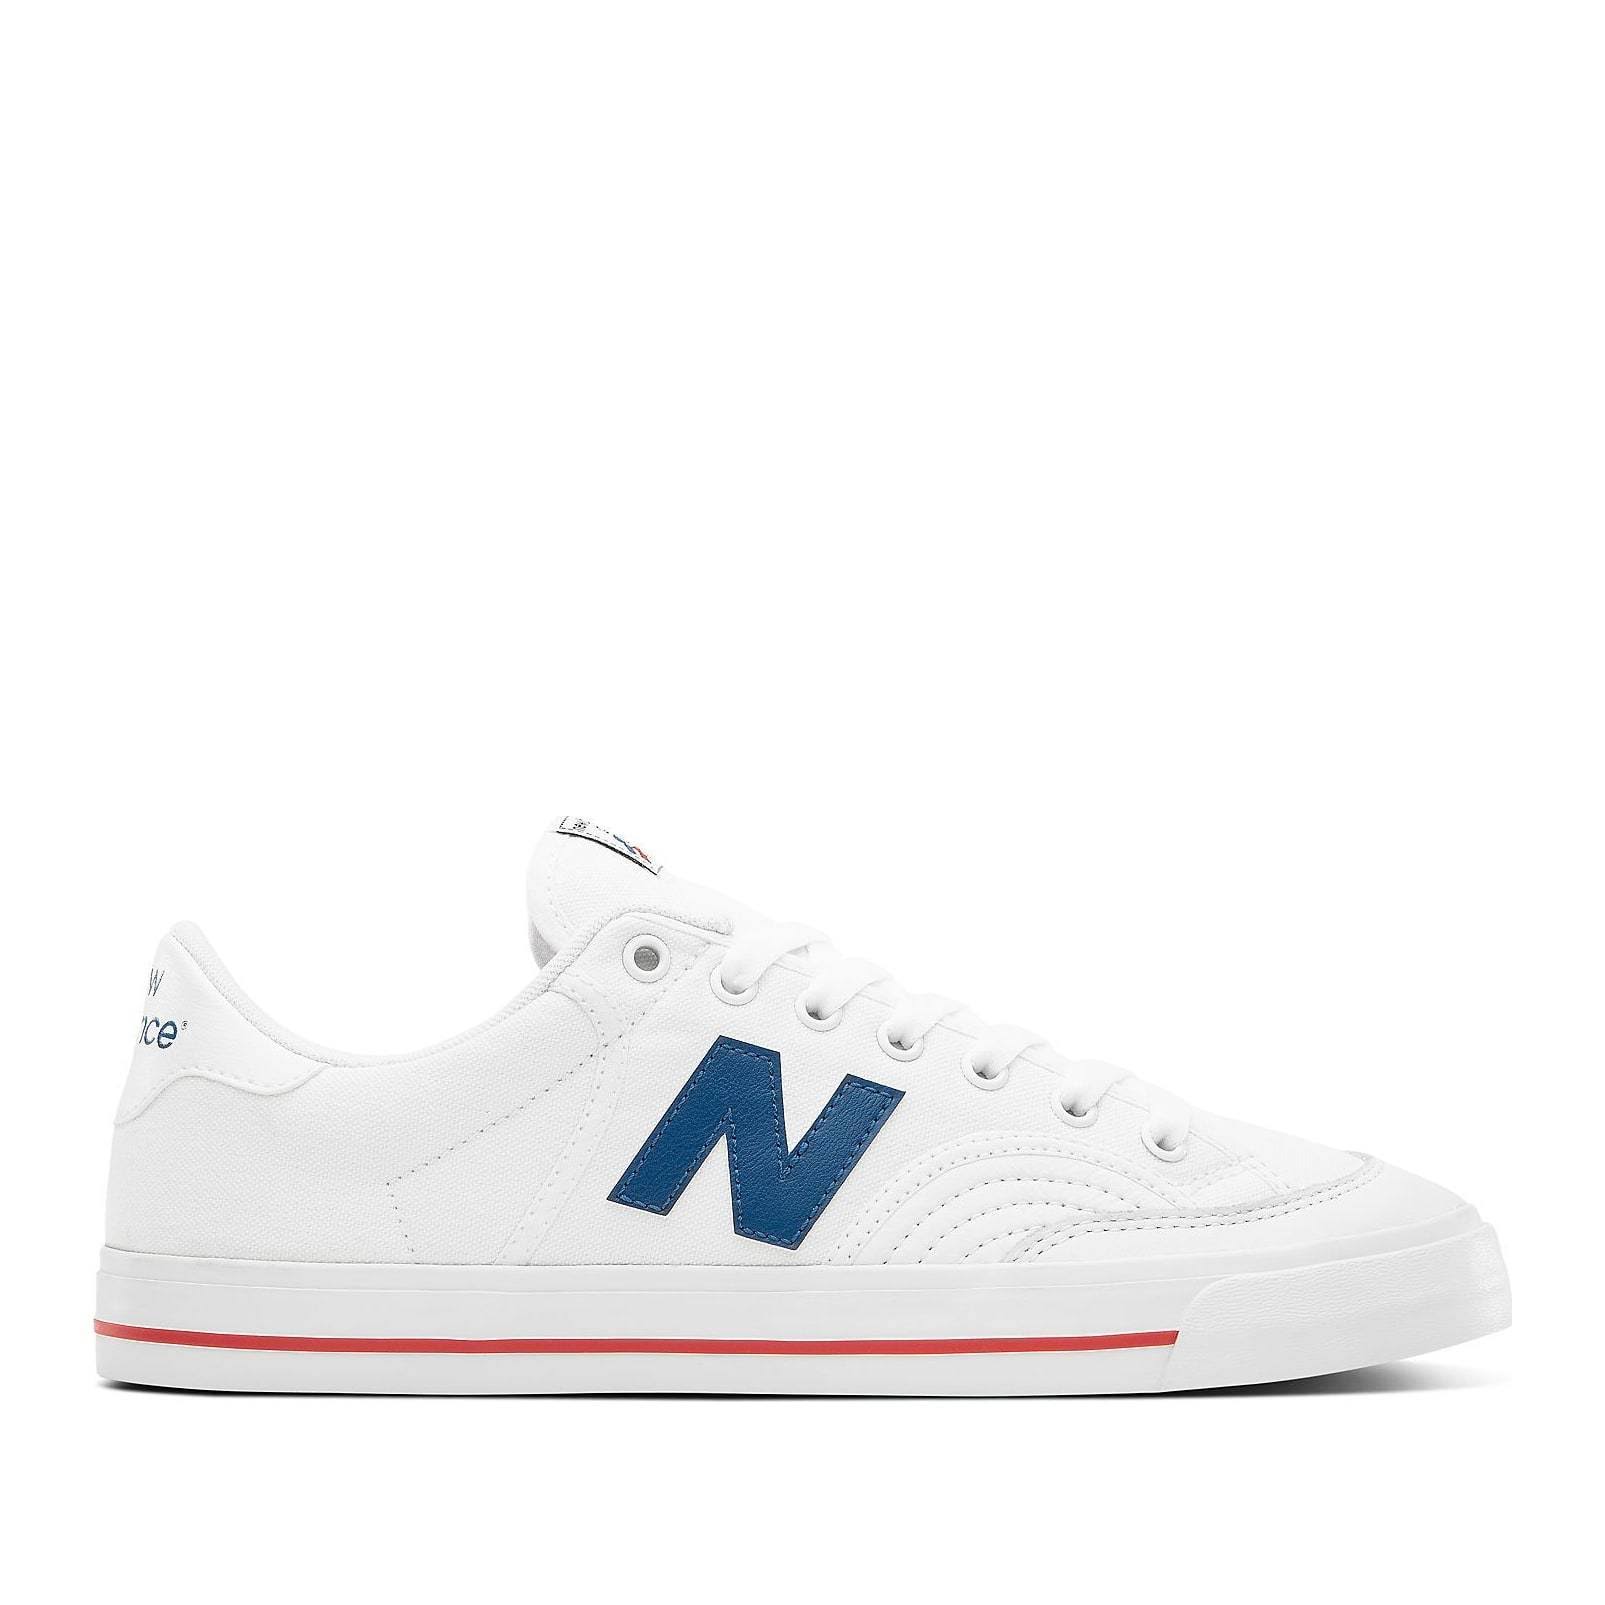 New Balance Men's Numeric NM212 - White/Blue (Size 8)